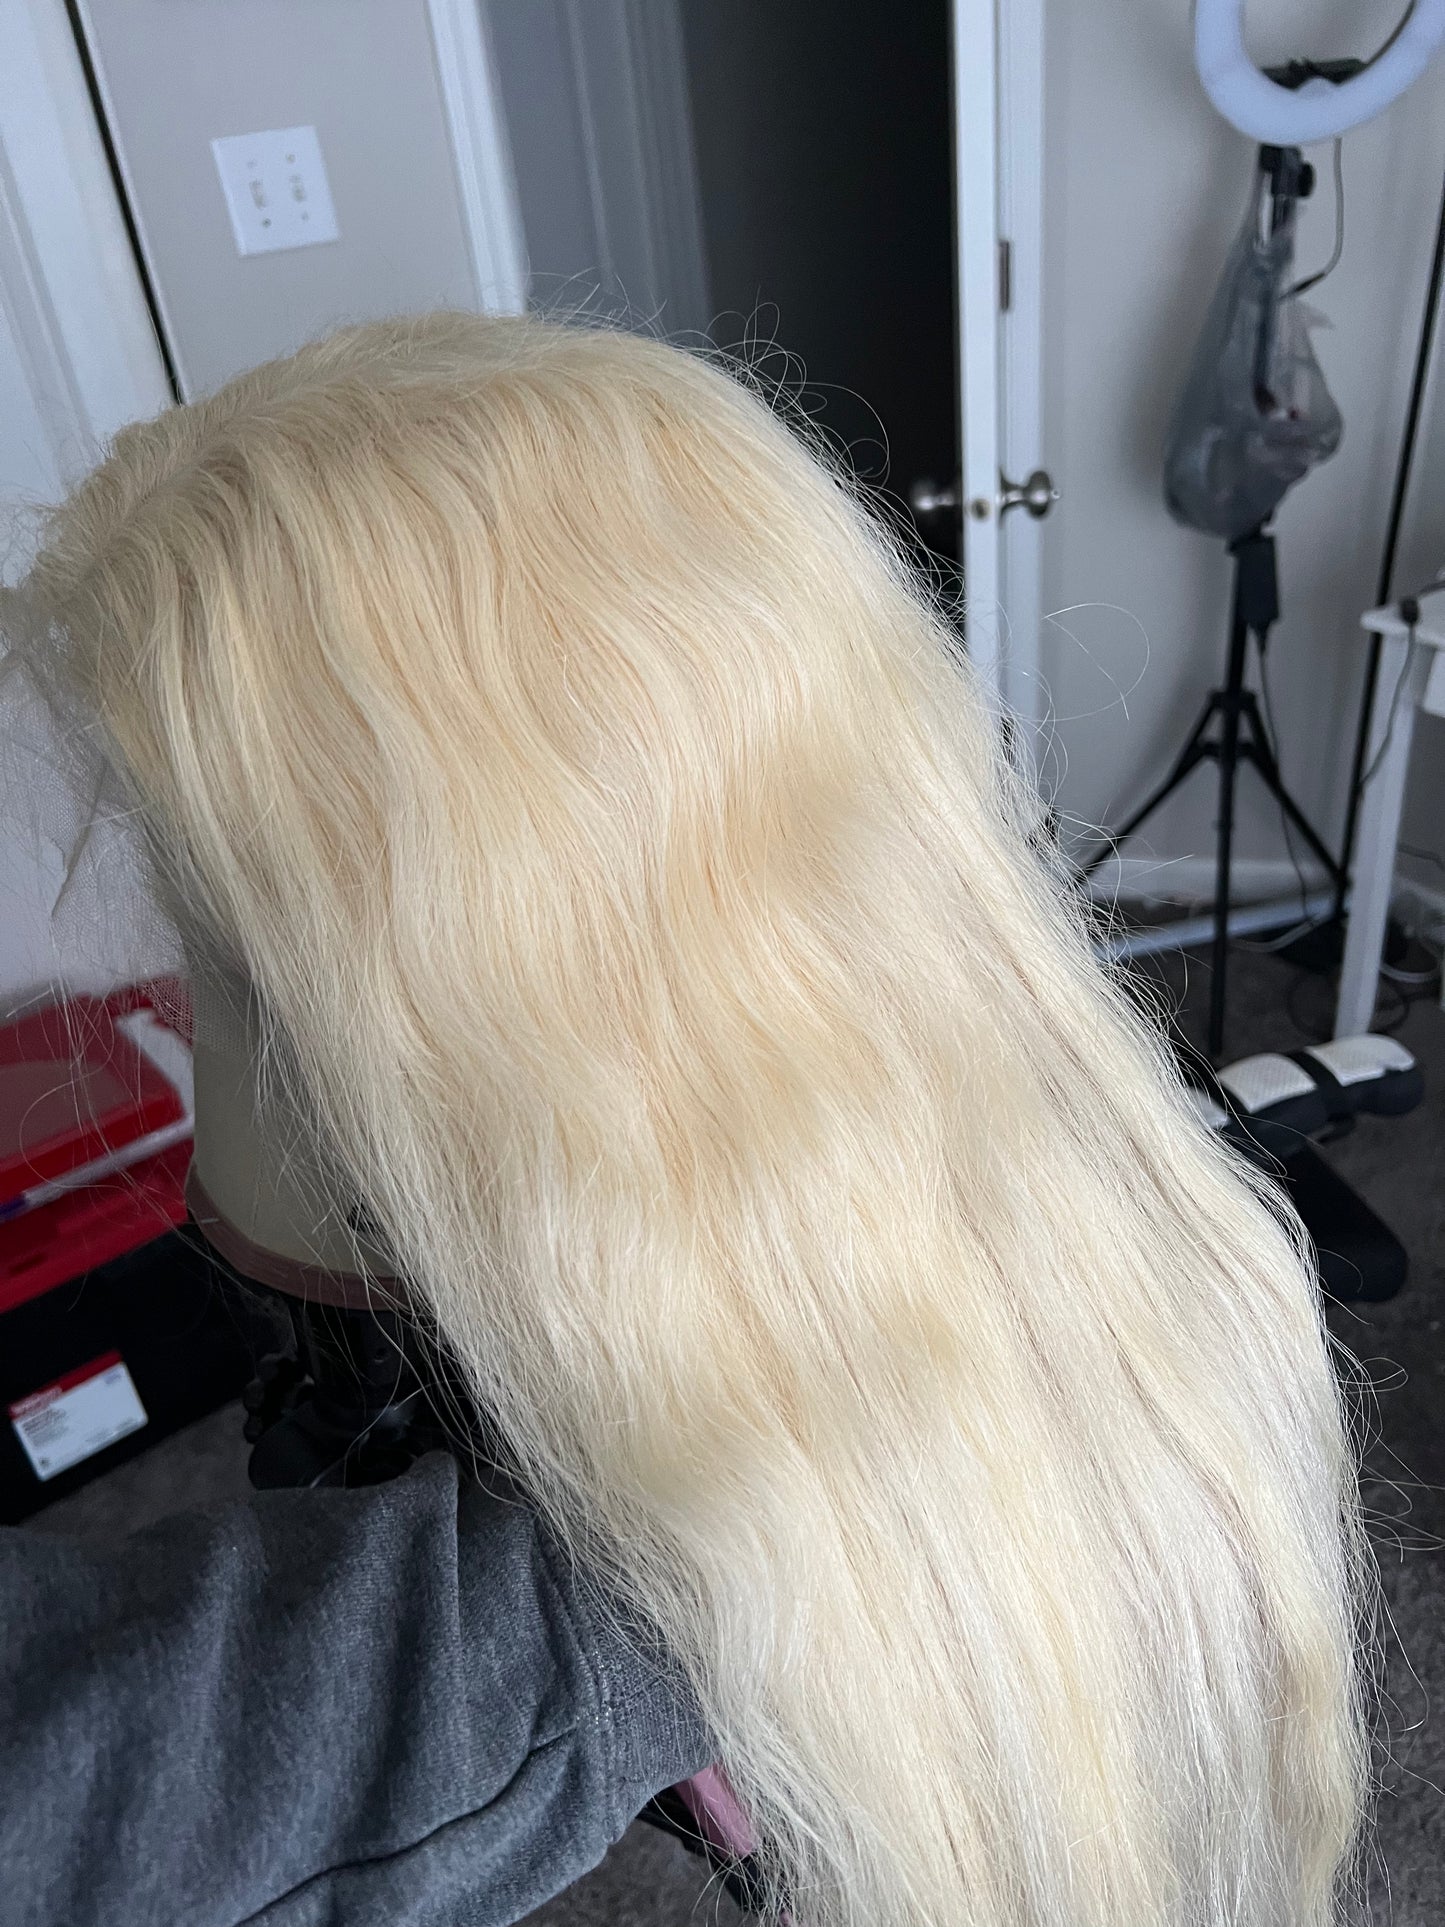 Pre-Order a Custom Made 13X6 Wig